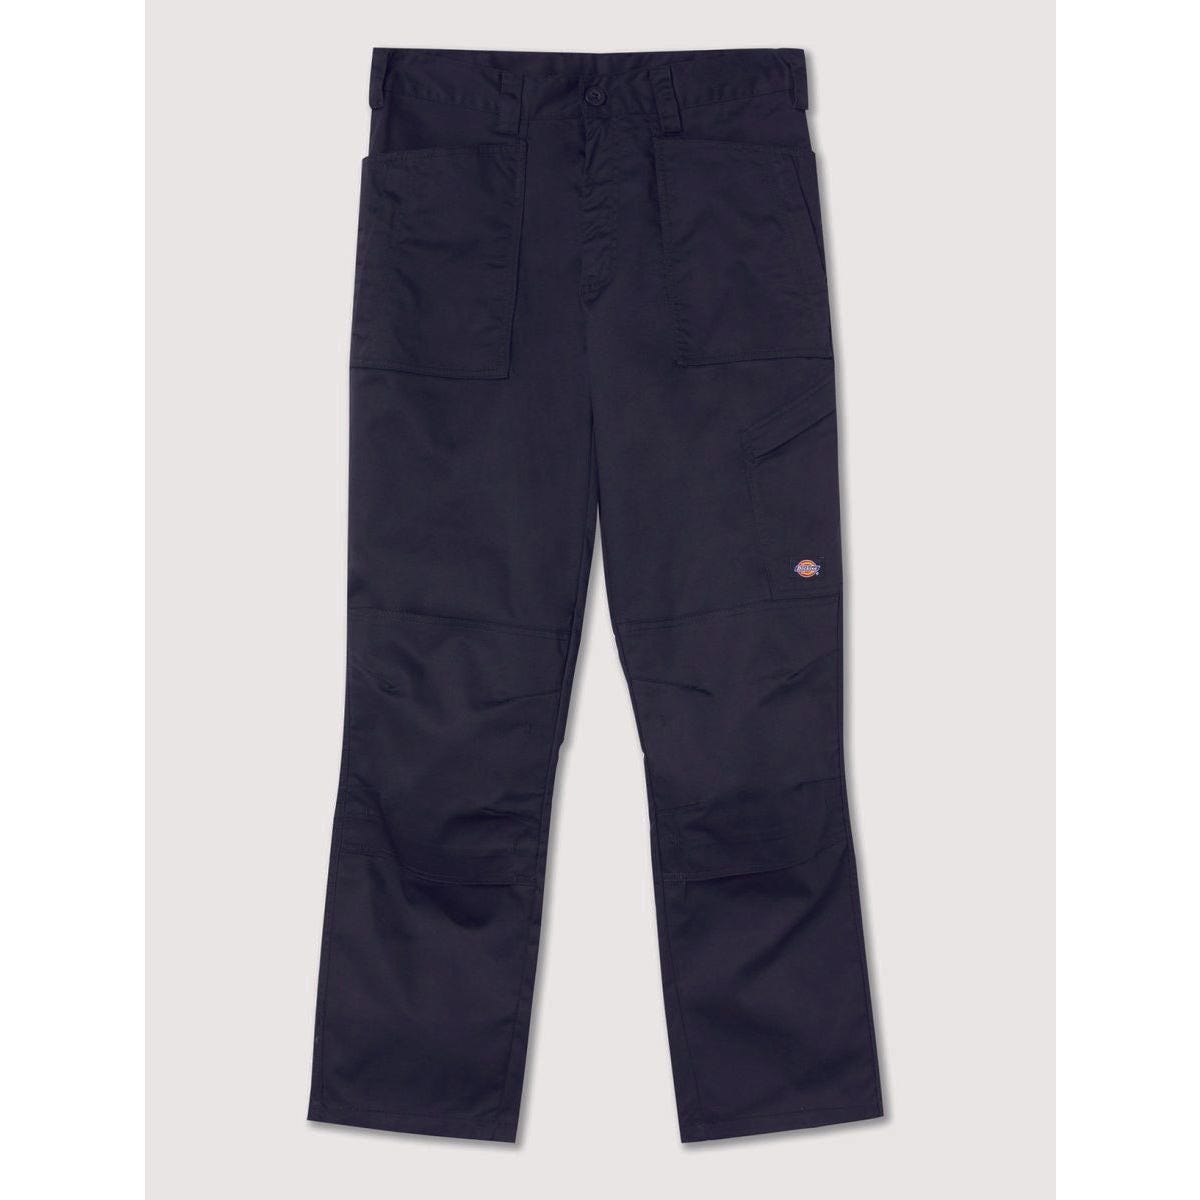 Pantalon de travail Action Flex bleu marine - Dickies - Taille 44 7